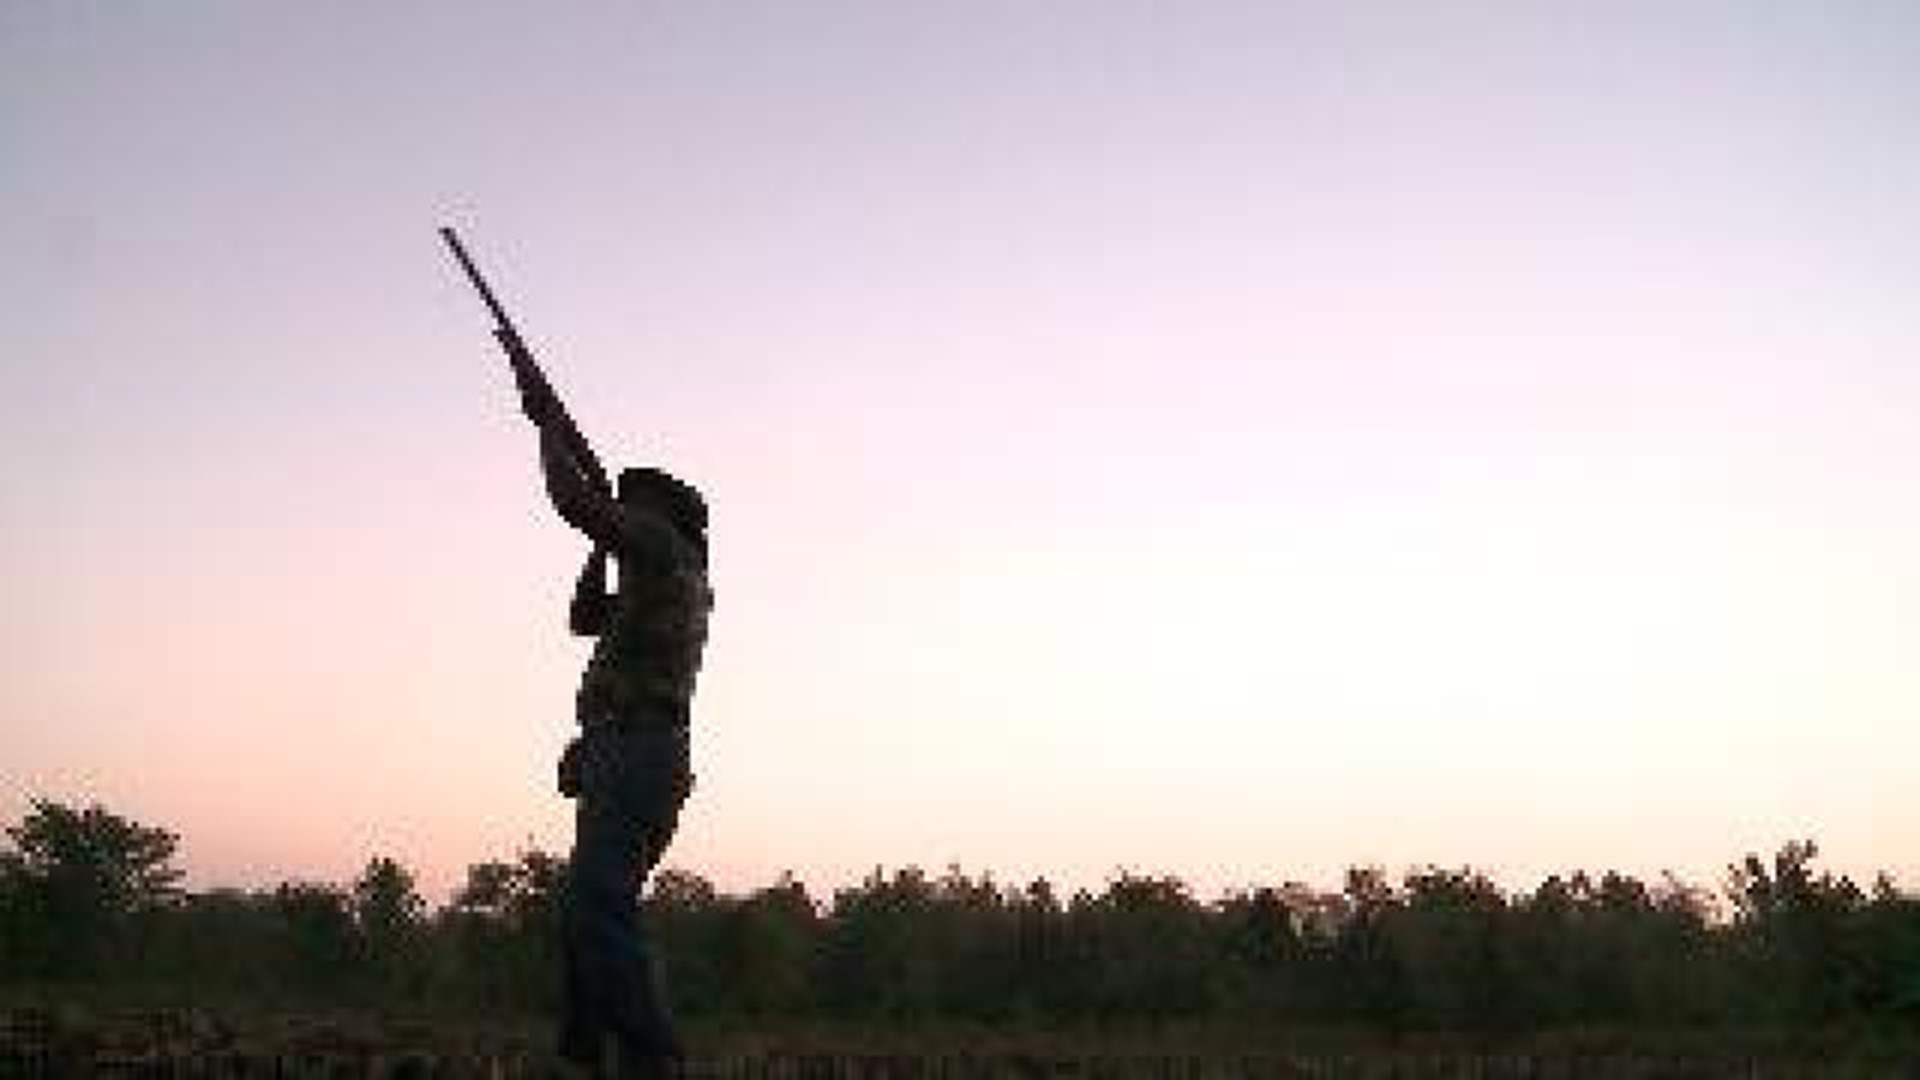 Dove Hunting Season Opens in Arkansas